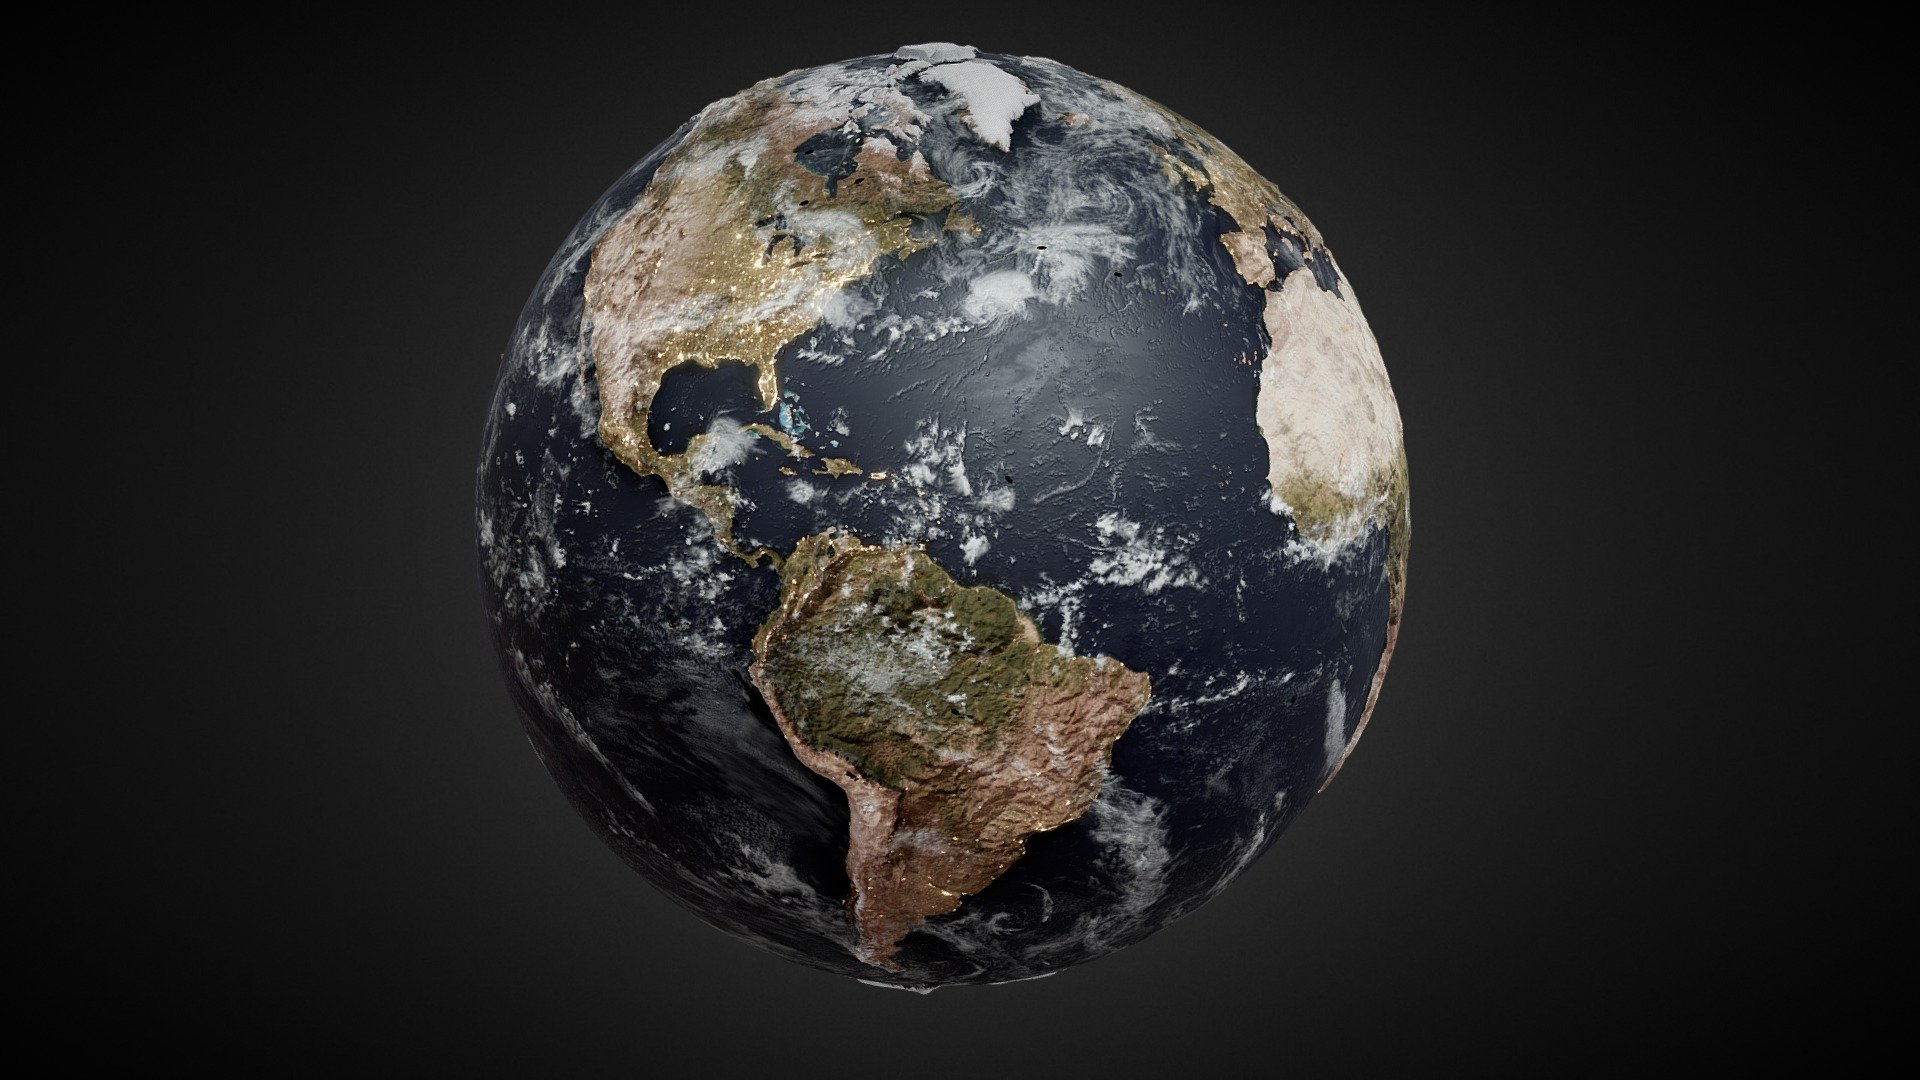 google earth pro view 3d model